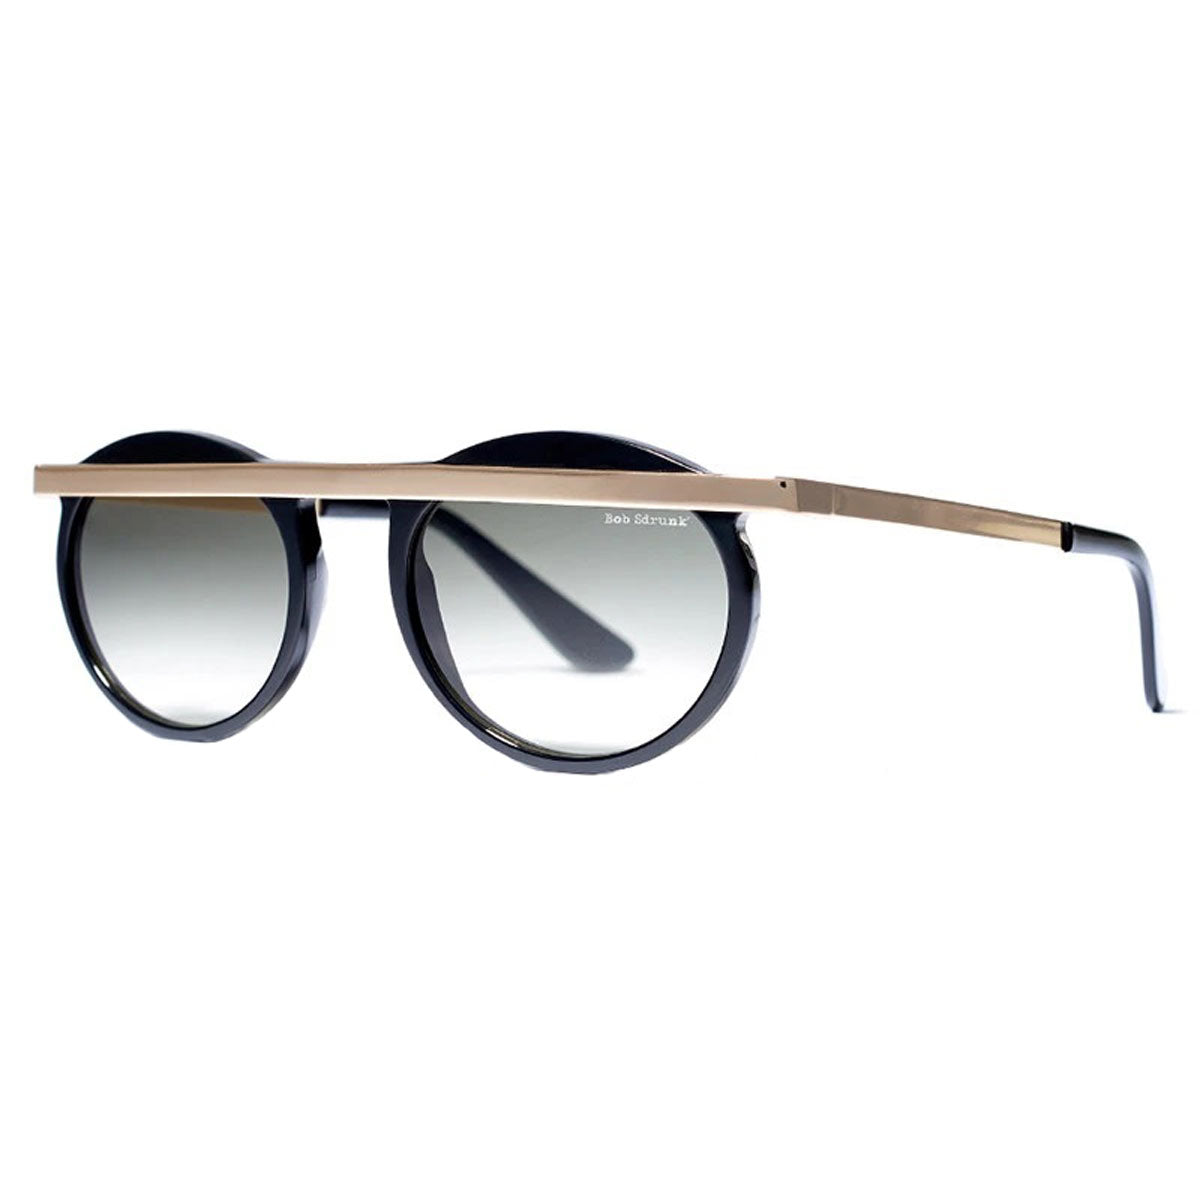 Bob Sdrunk Women's Sunglasses - Nippa Black and Gold Frame / NIPPA-01-GG-41-19-140